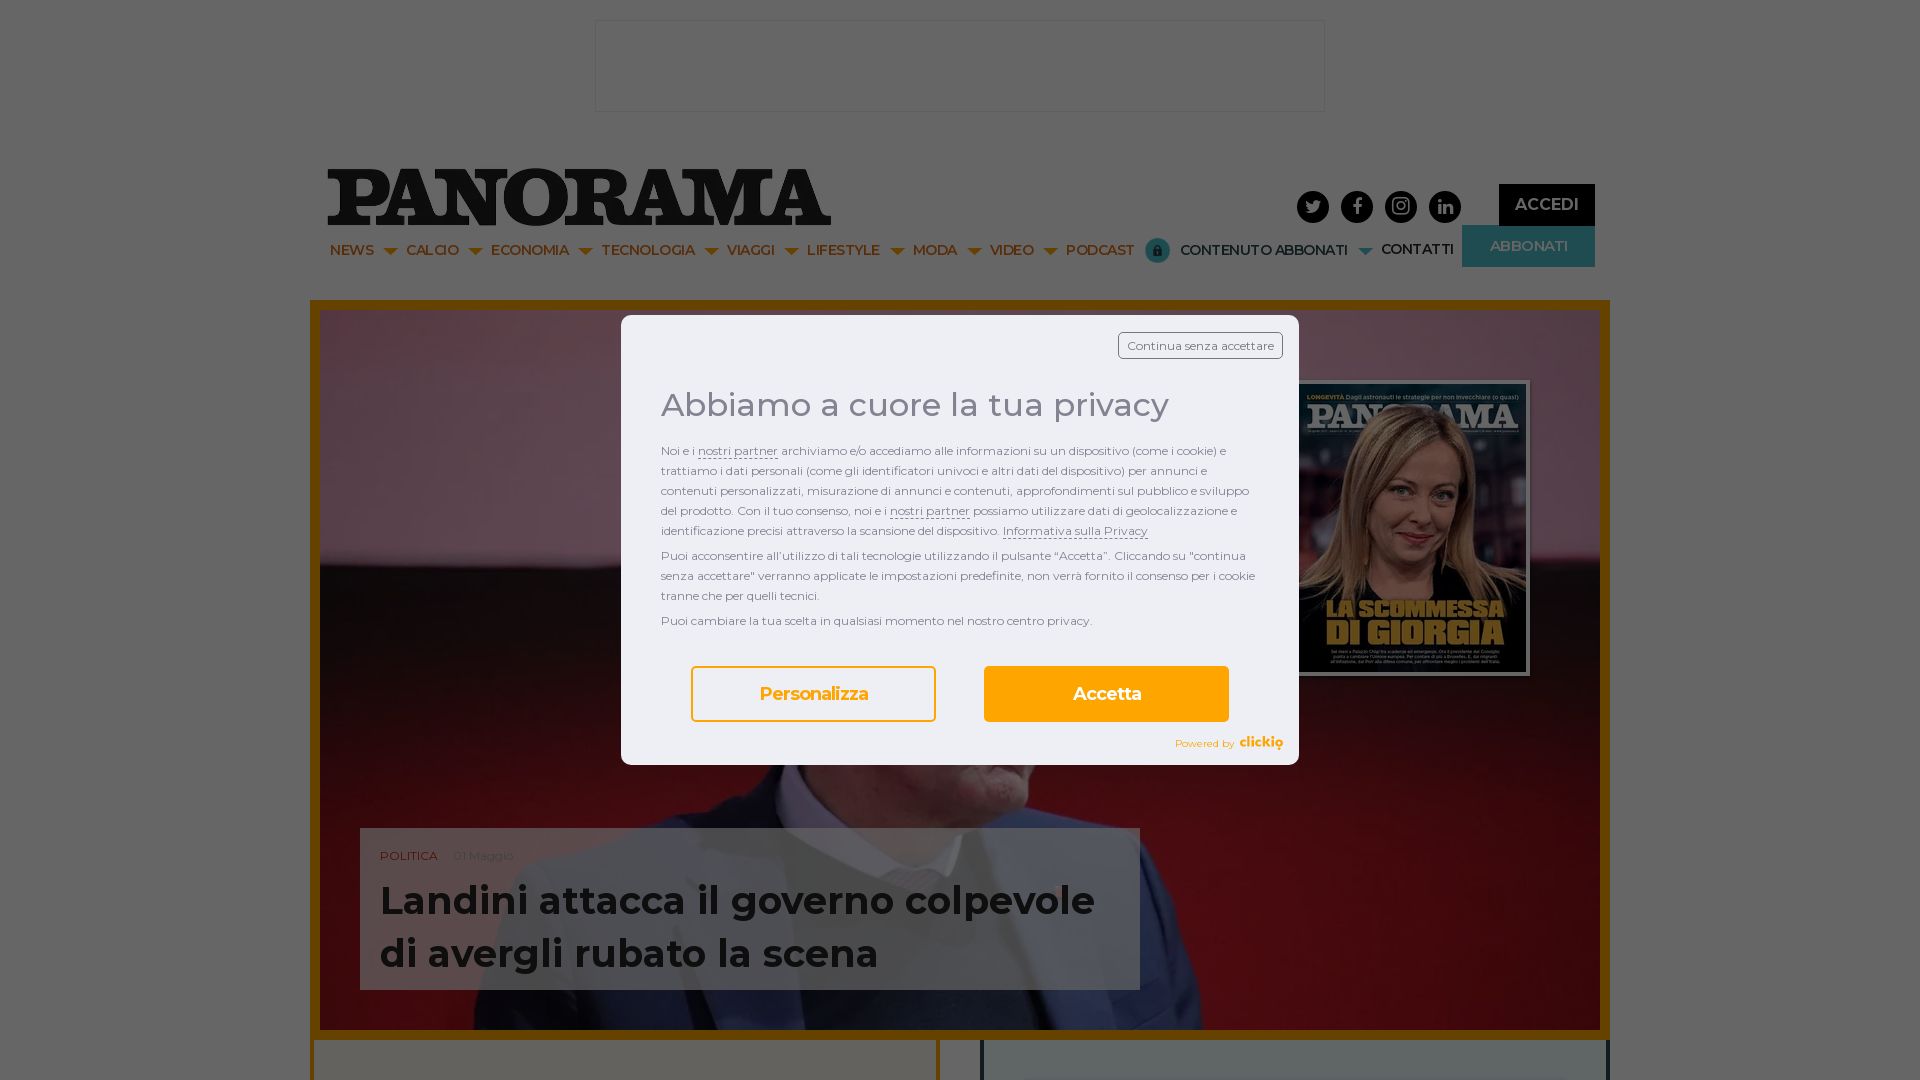 Website status panorama.it is   ONLINE